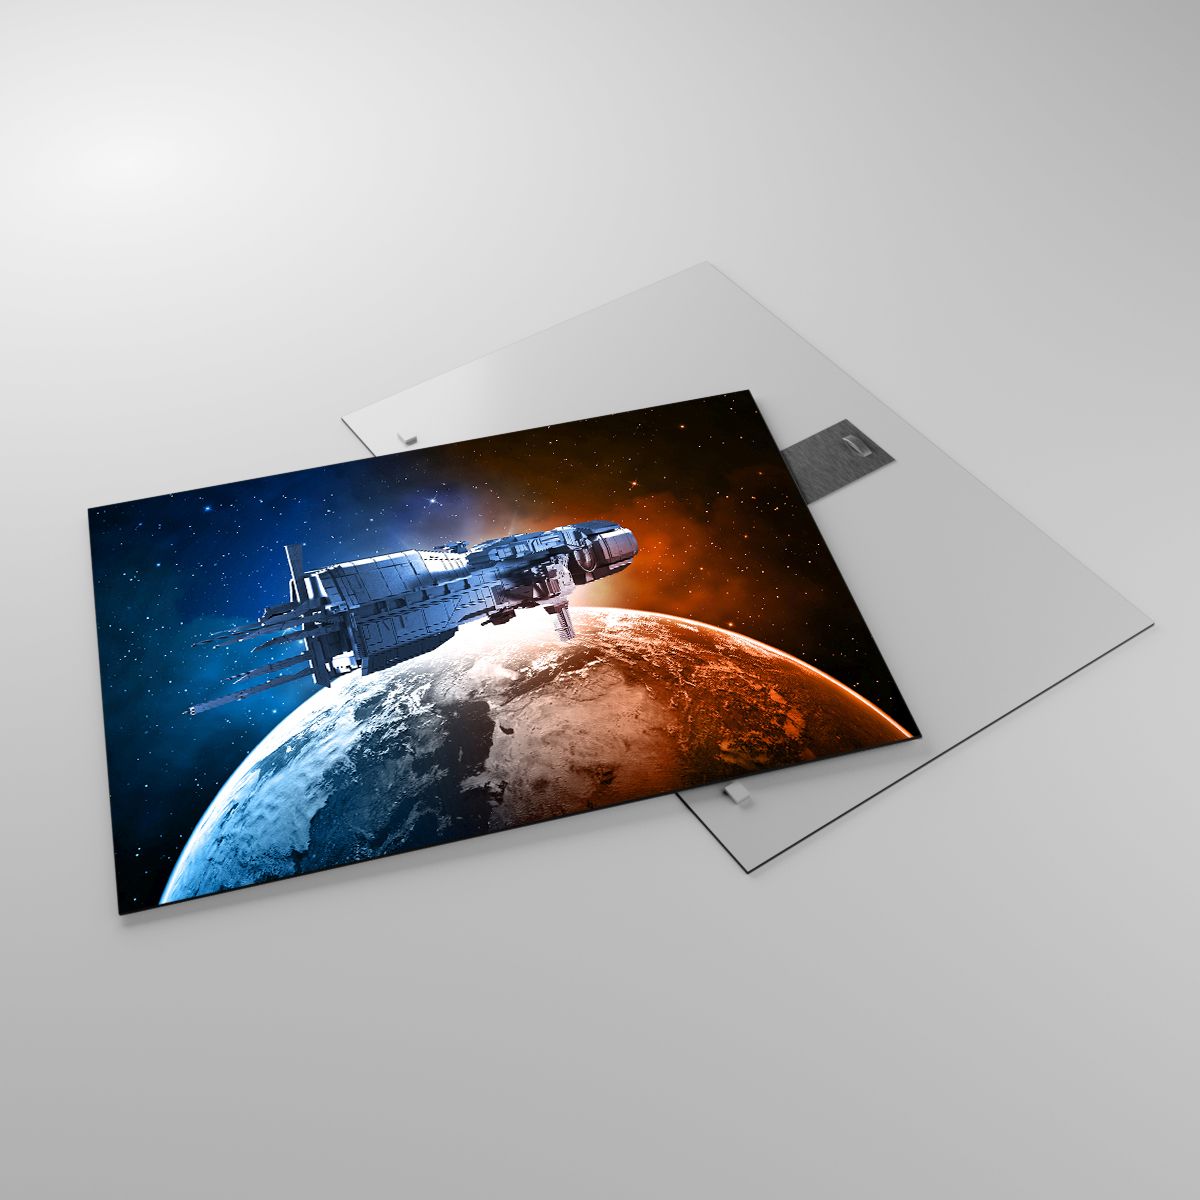 Glasbild Kosmos, Glasbild Raumfahrzeug, Glasbild Das Shuttle, Glasbild Globus, Glasbild Astronomie